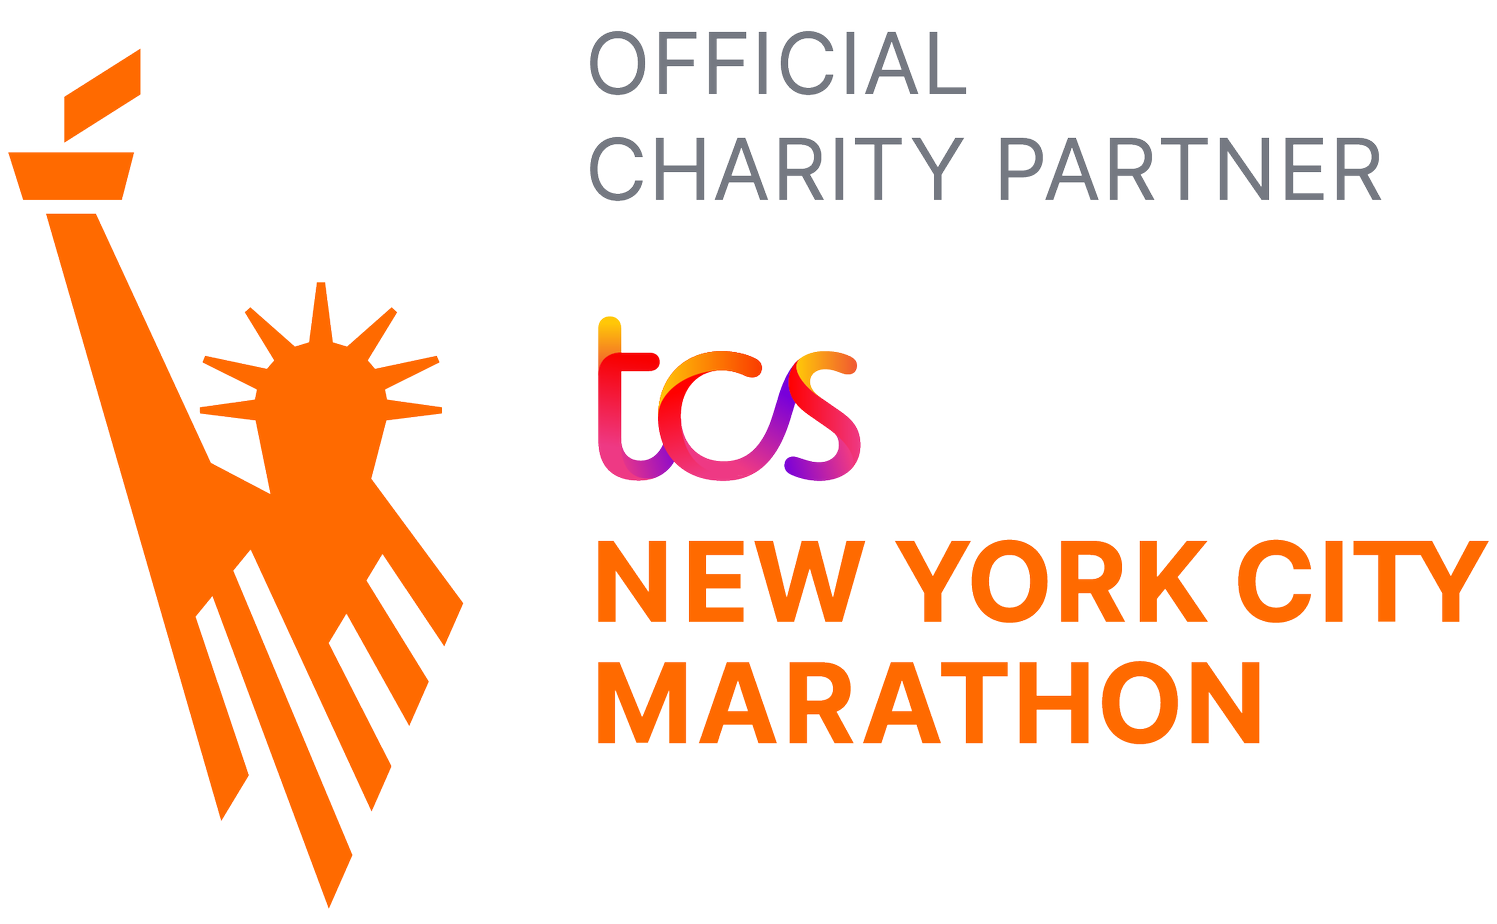 New York City Marathon partner logo